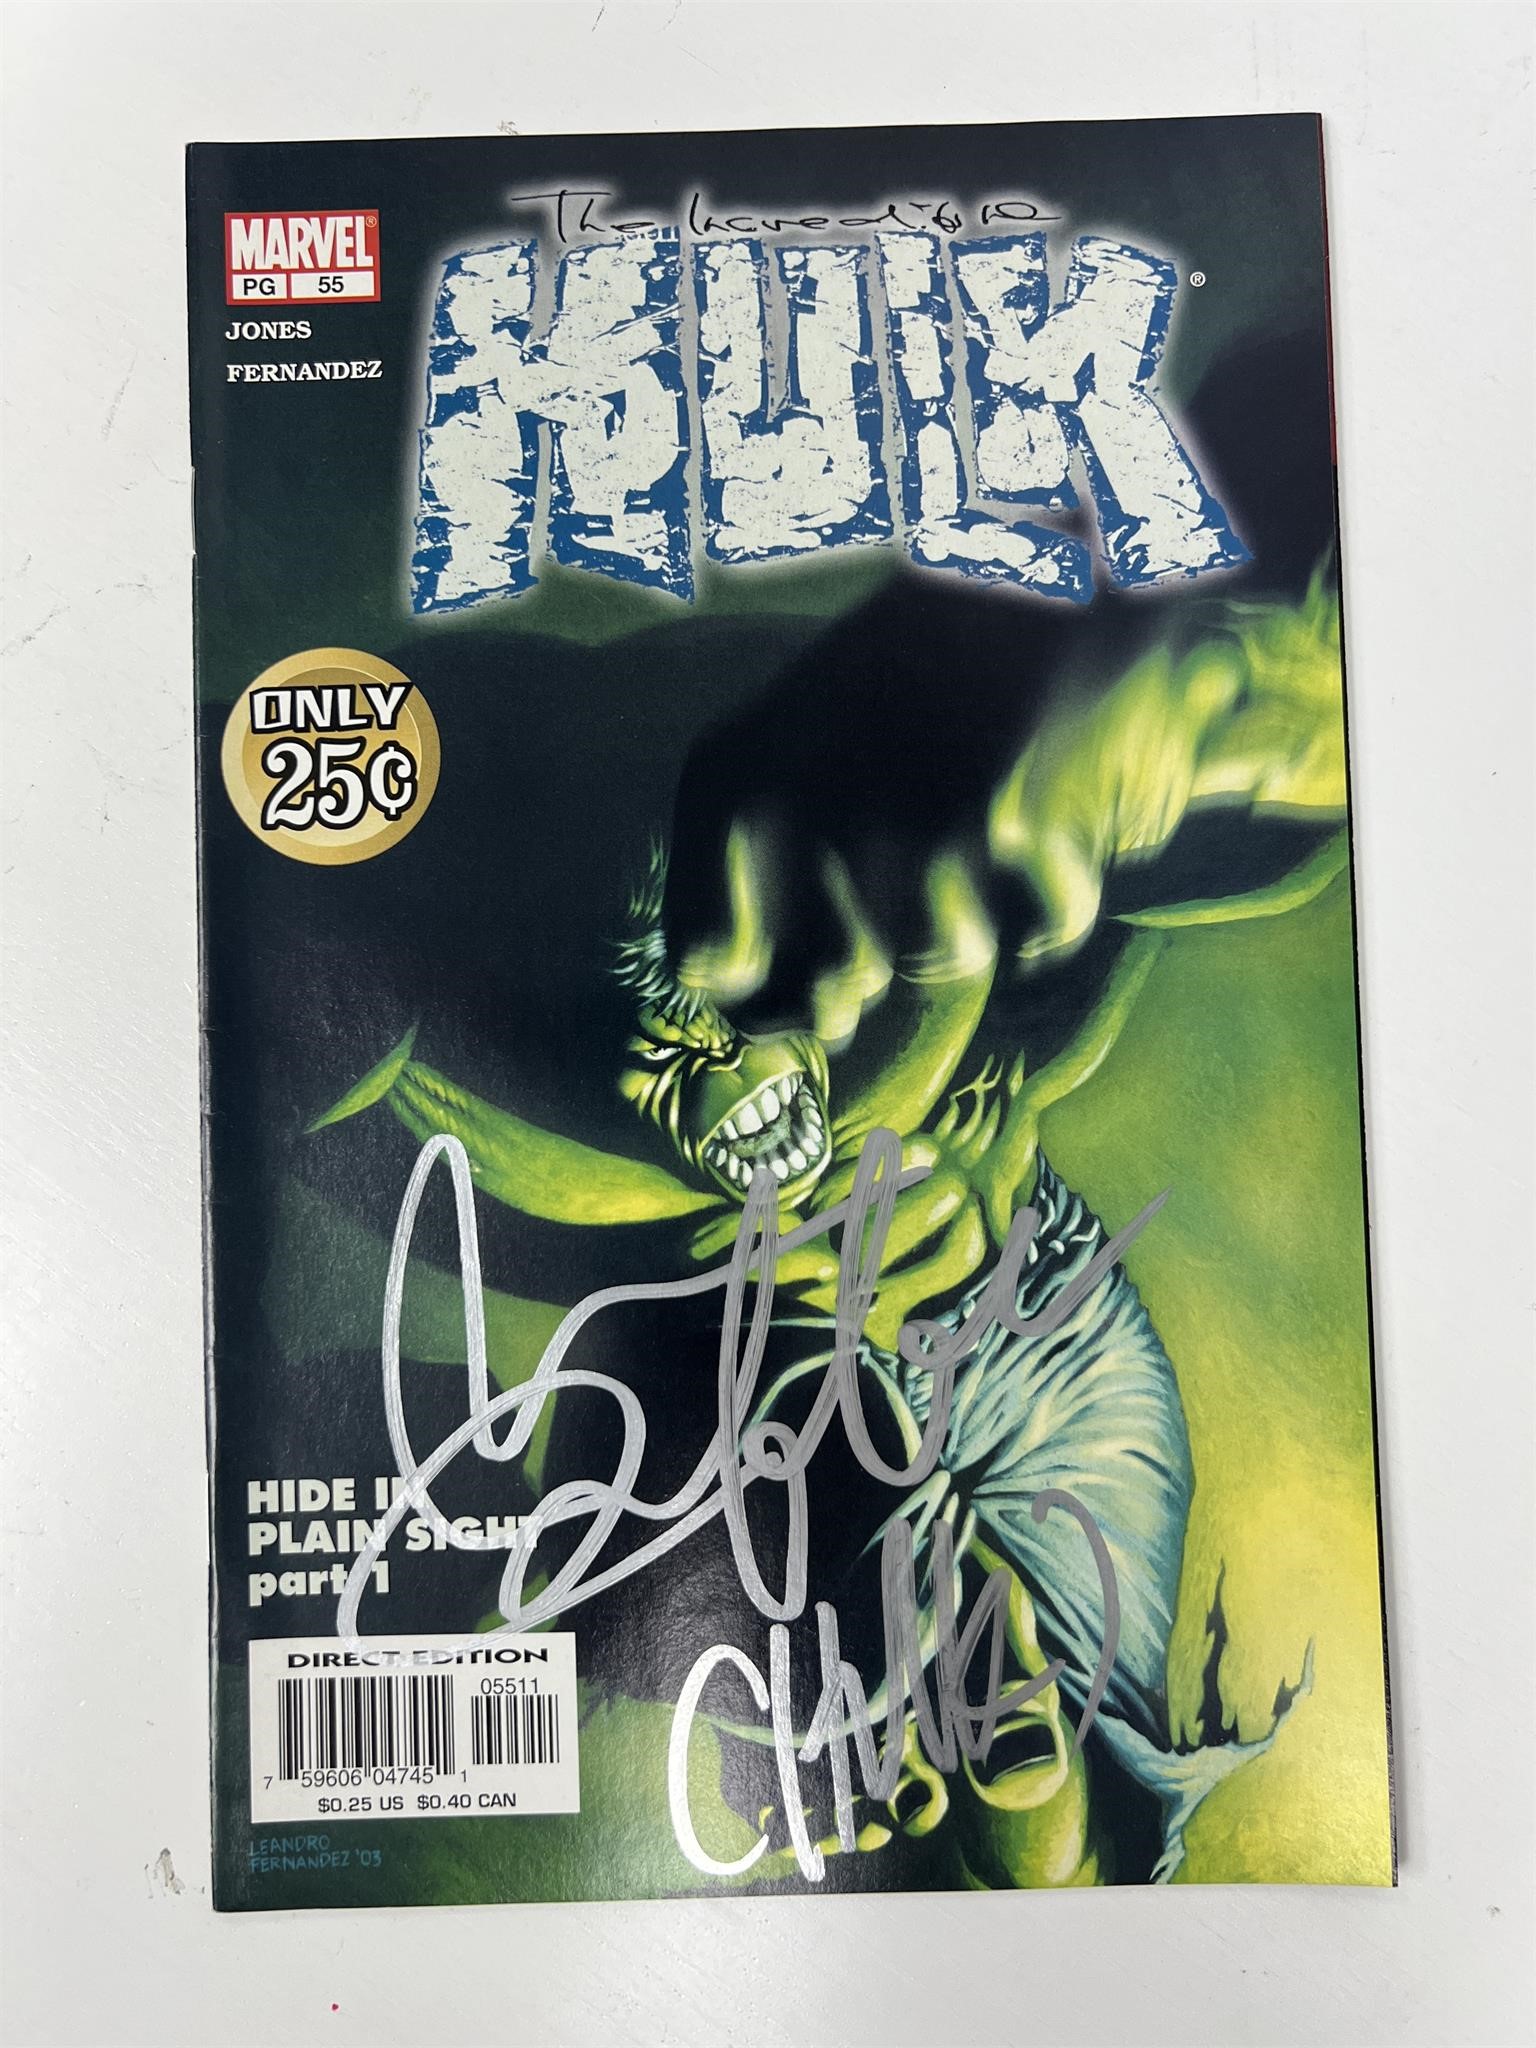 Autograph COA MARVEL DC Comics Movie Media Press Photo F